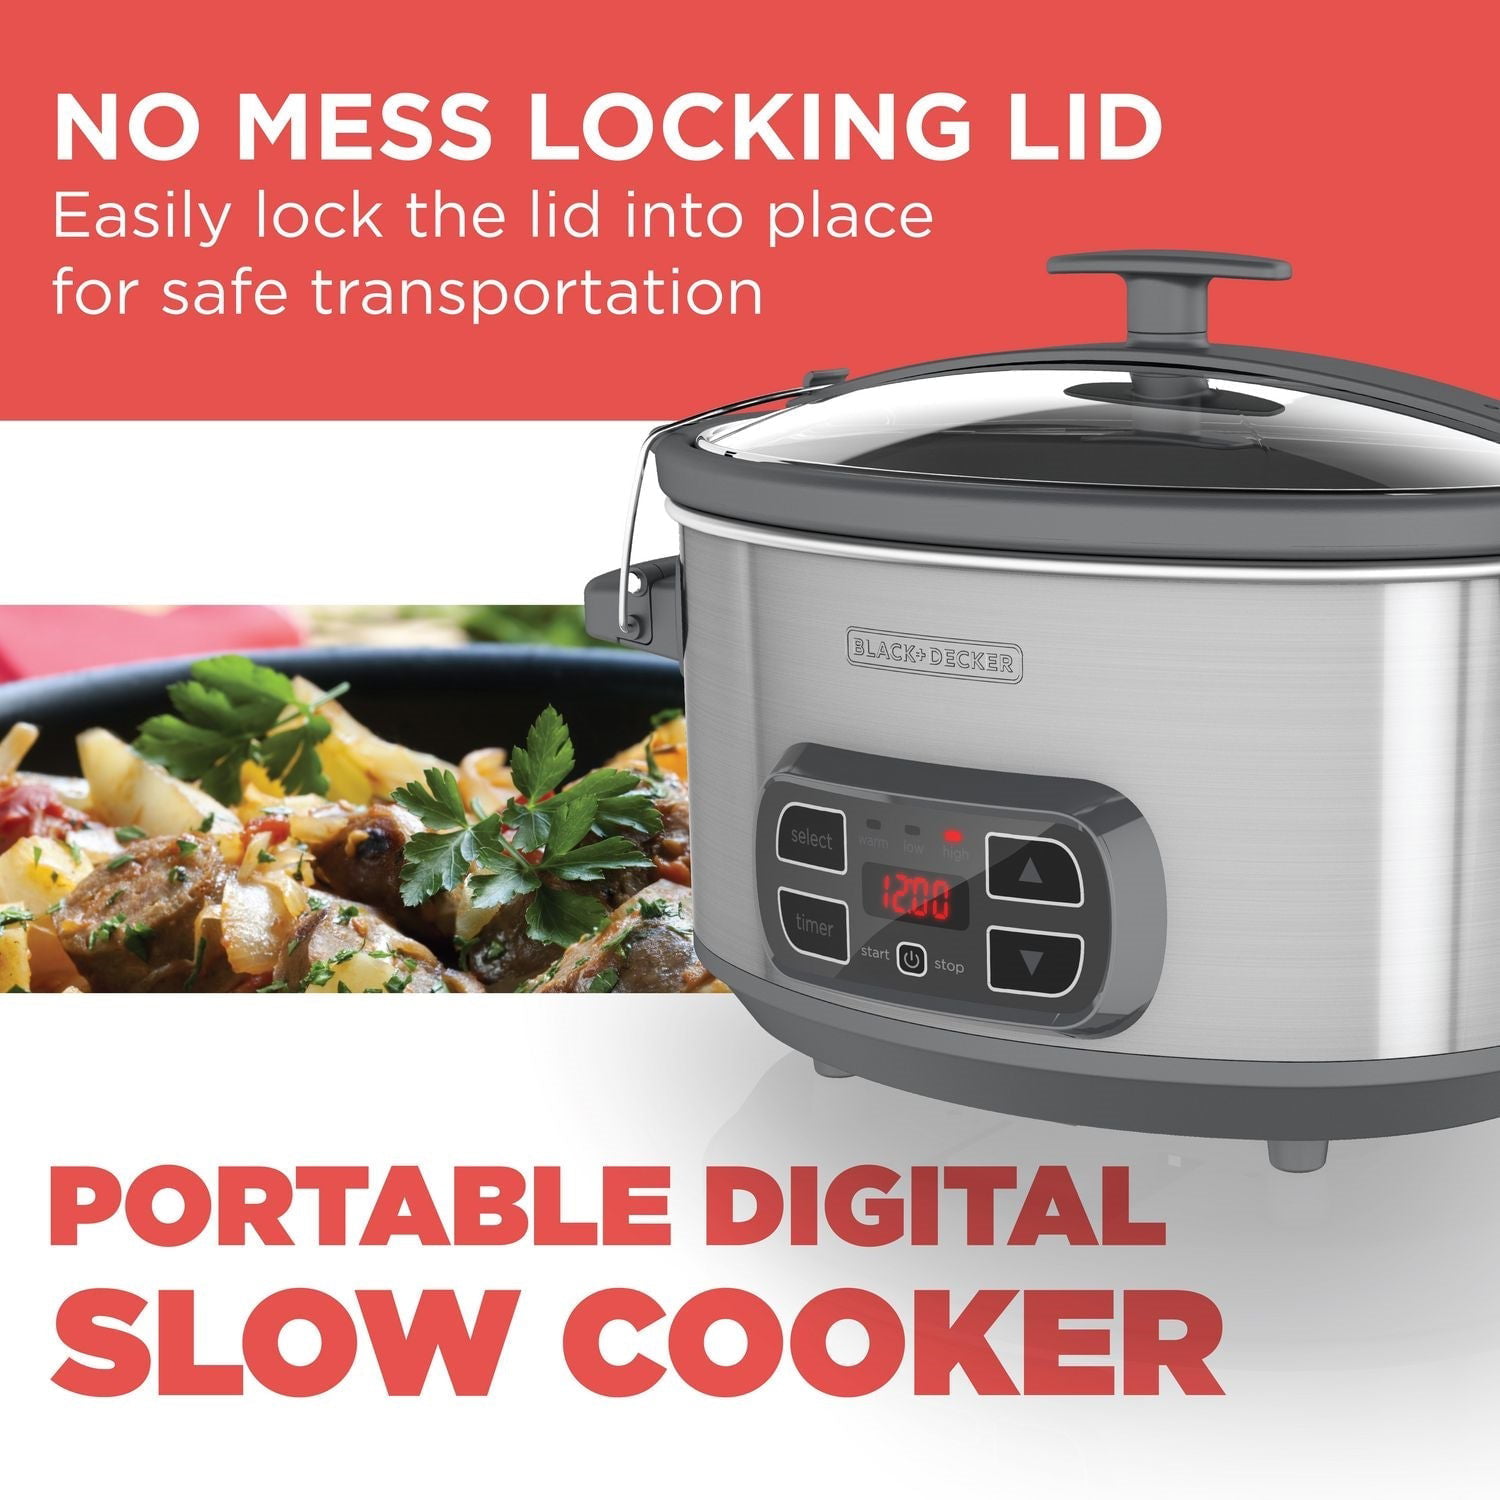 Crock-Pot® Lift and Serve Programmable Slow Cooker - Black/Cream